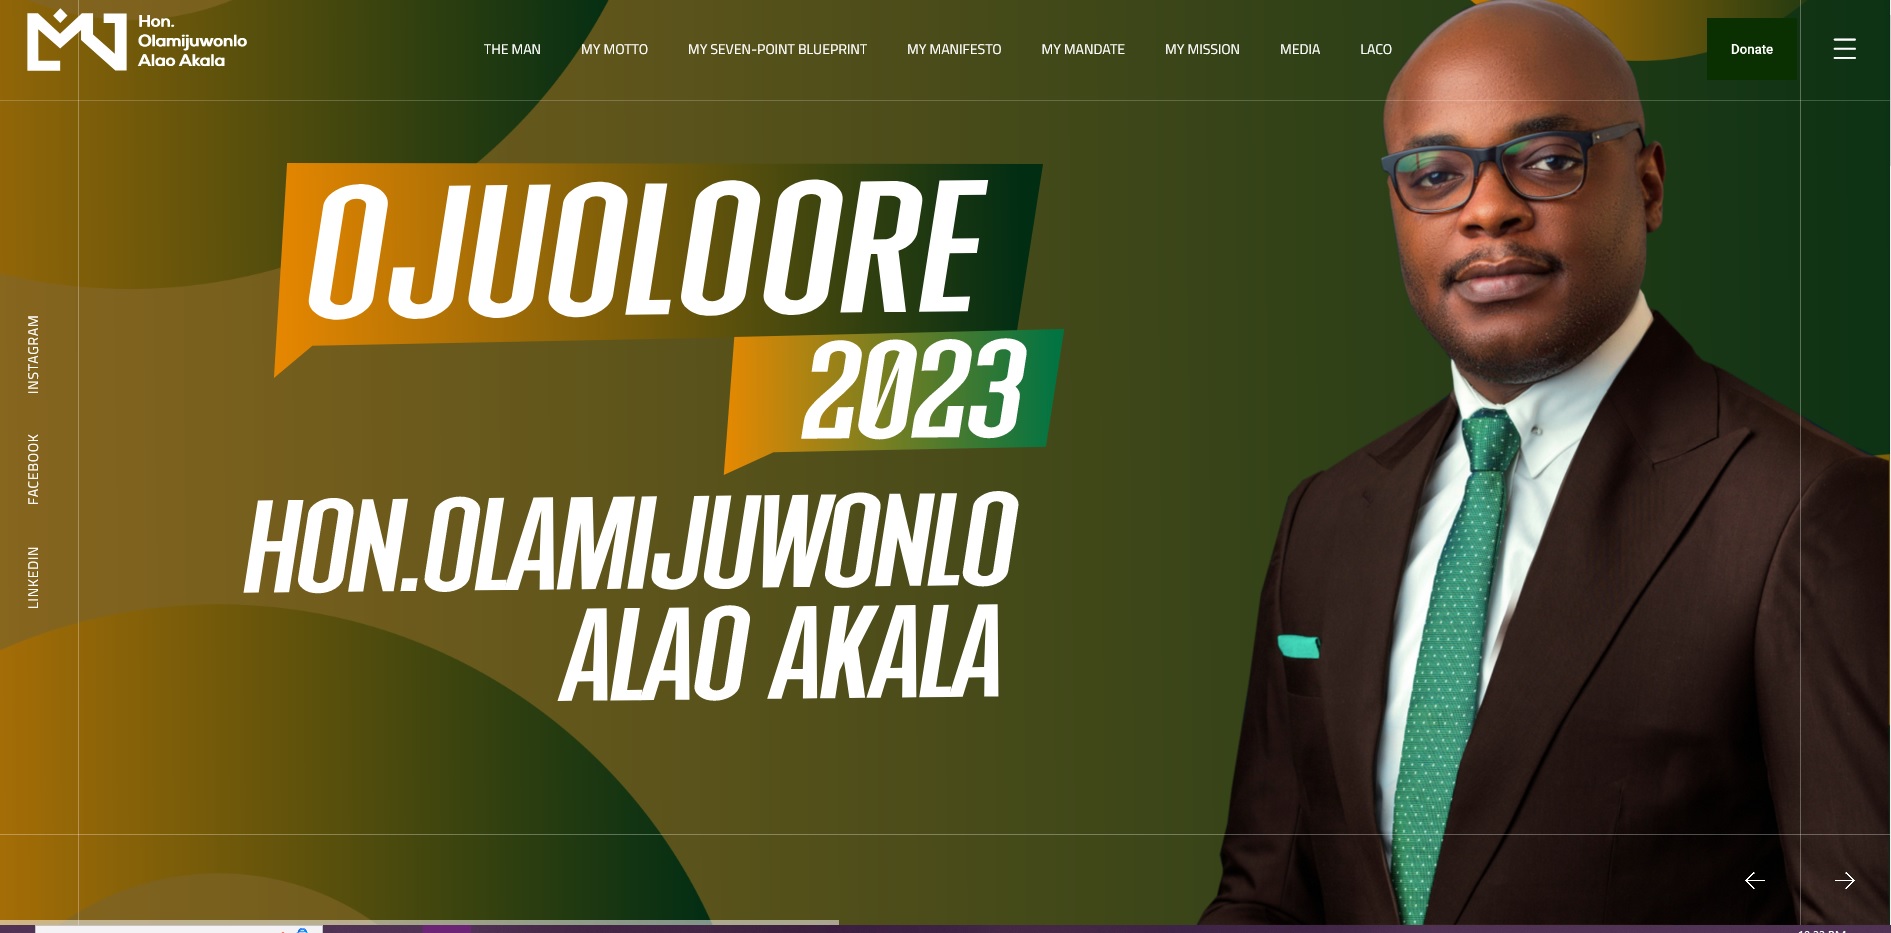 Website Design for Olamijuwonlo Brand